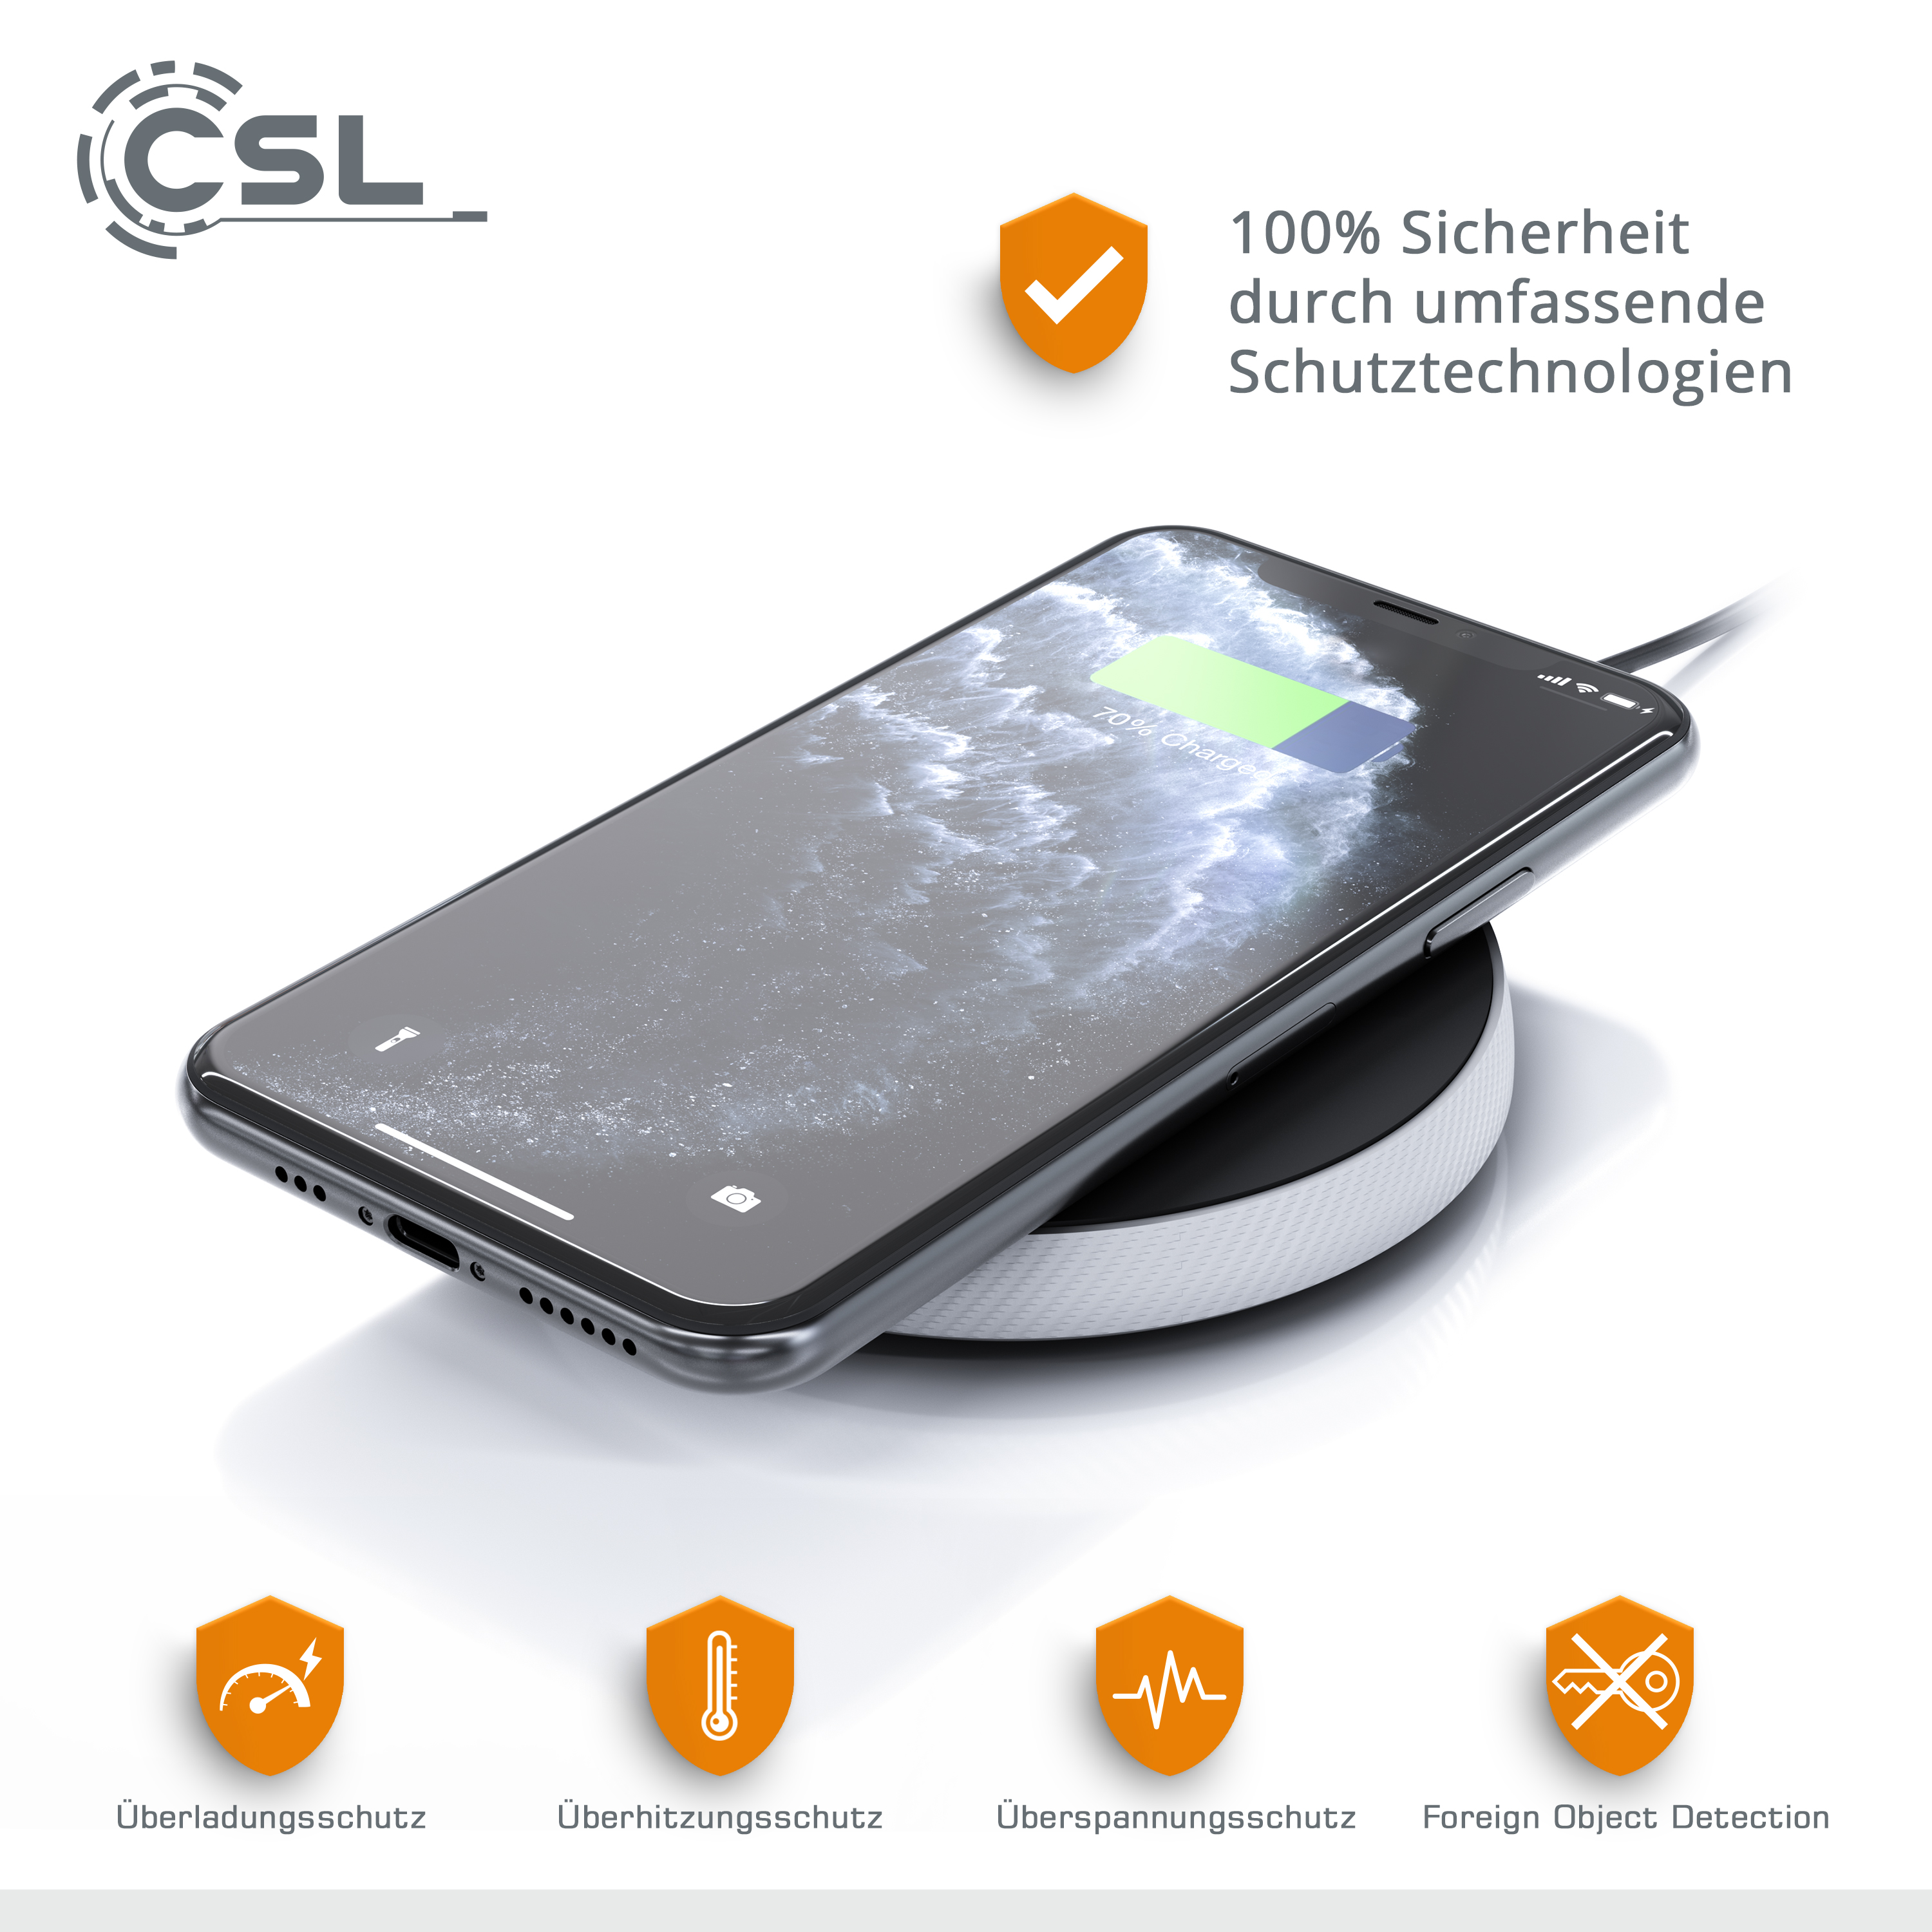 CSL Wireless Universal, silber-schwarz Qi Pad Charger Ladegerät